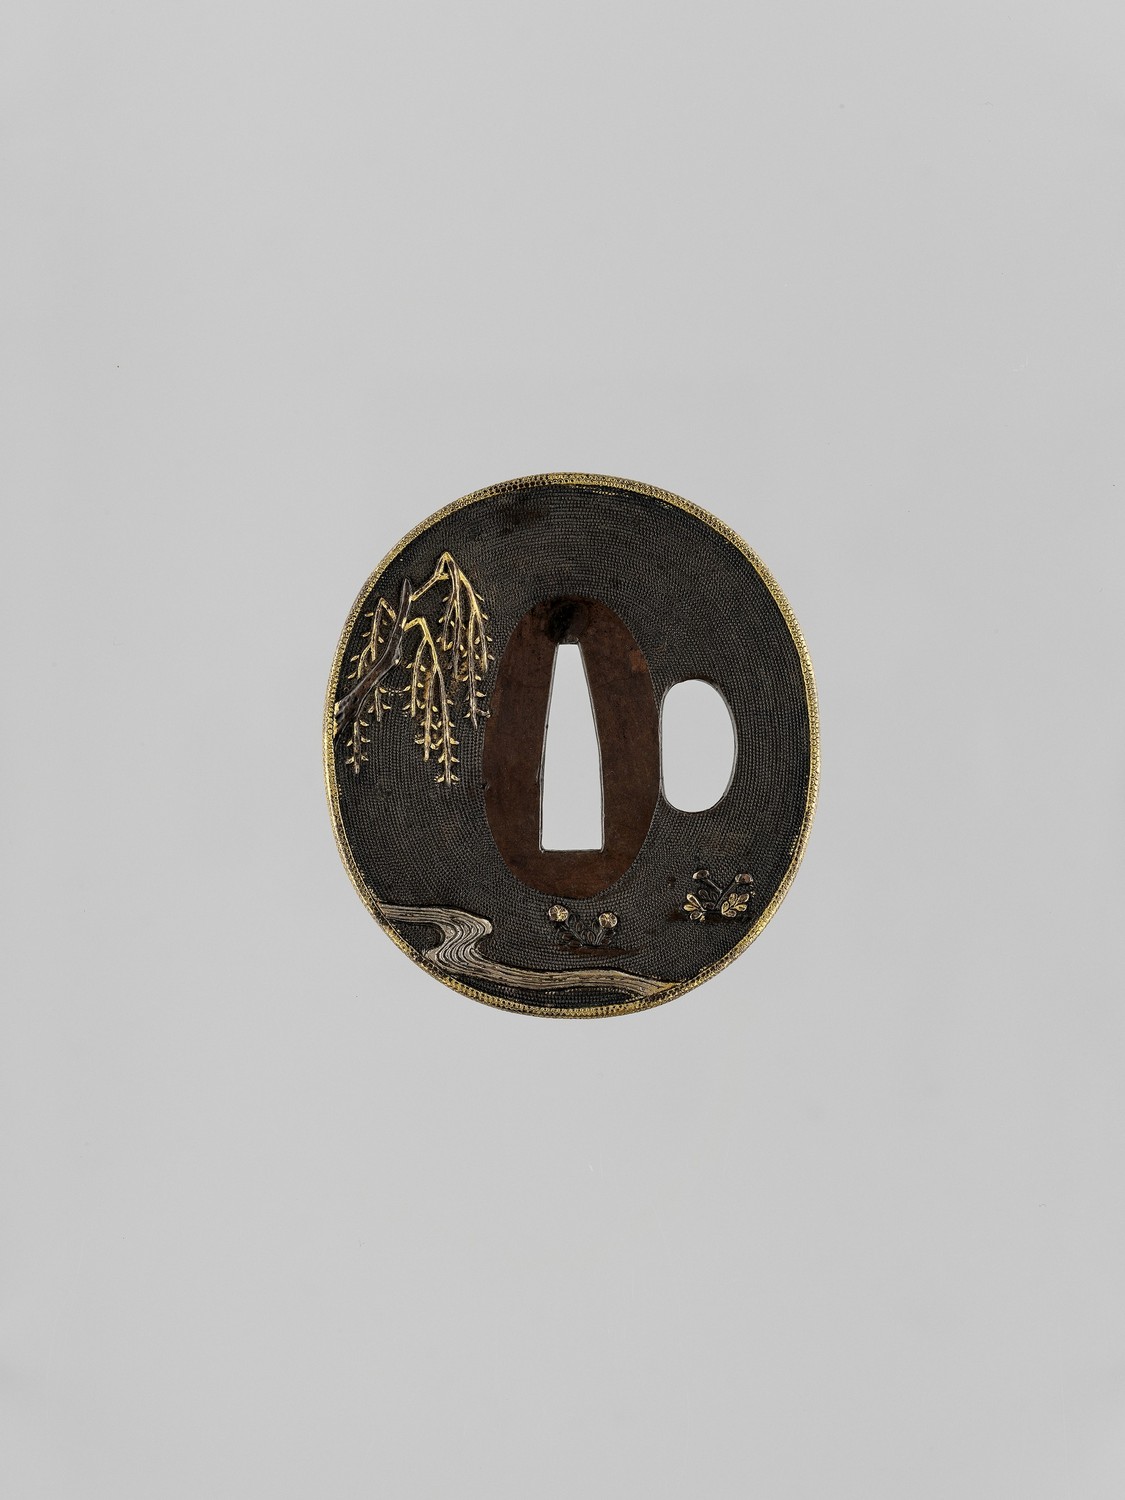 A GOLD AND SILVER-INLAID SHAKUDO TSUBA WITH OX AND BOKUDO - Image 4 of 4